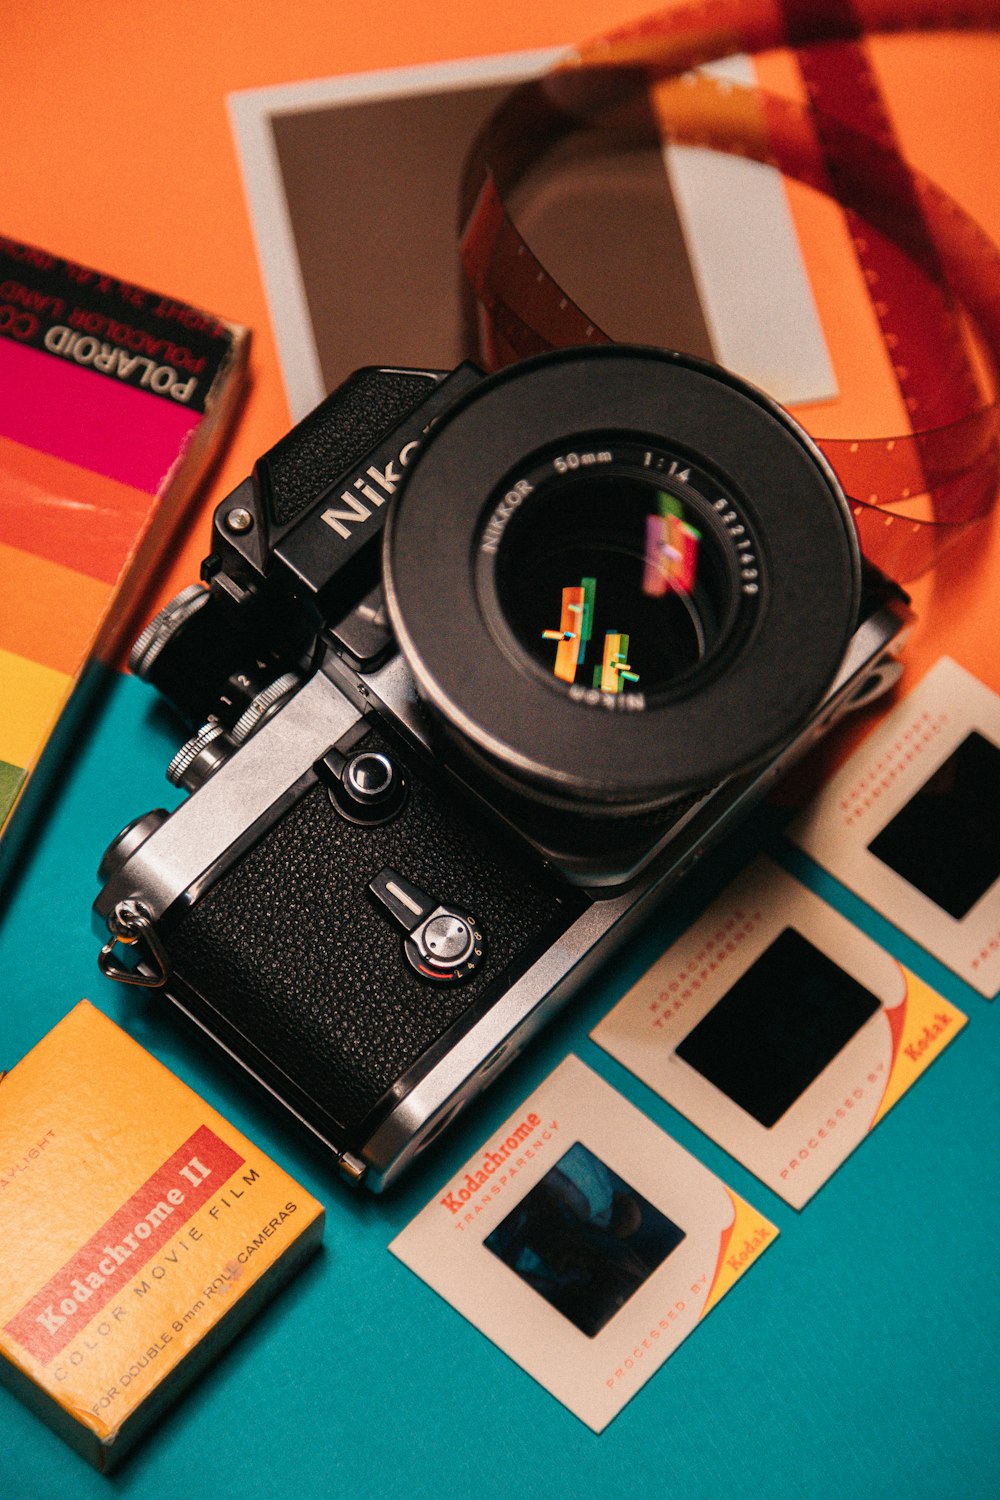 fotocamera DSLR Nikon nera su superficie blu